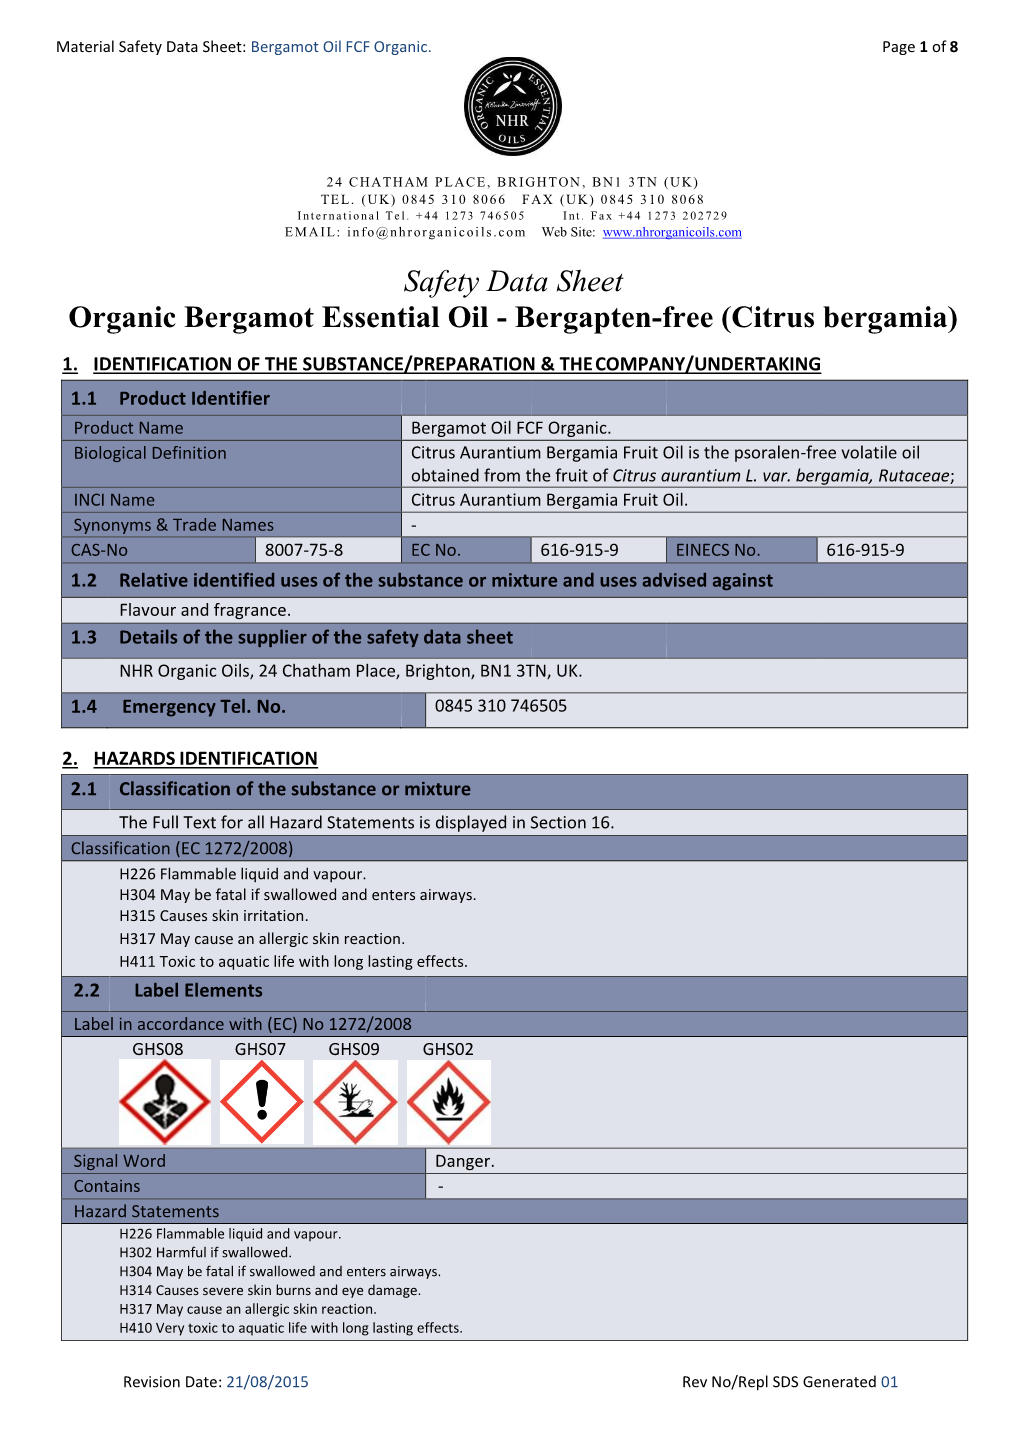 Safety Data Sheet Organic Bergamot Essential Oil - Bergapten-Free (Citrus Bergamia)